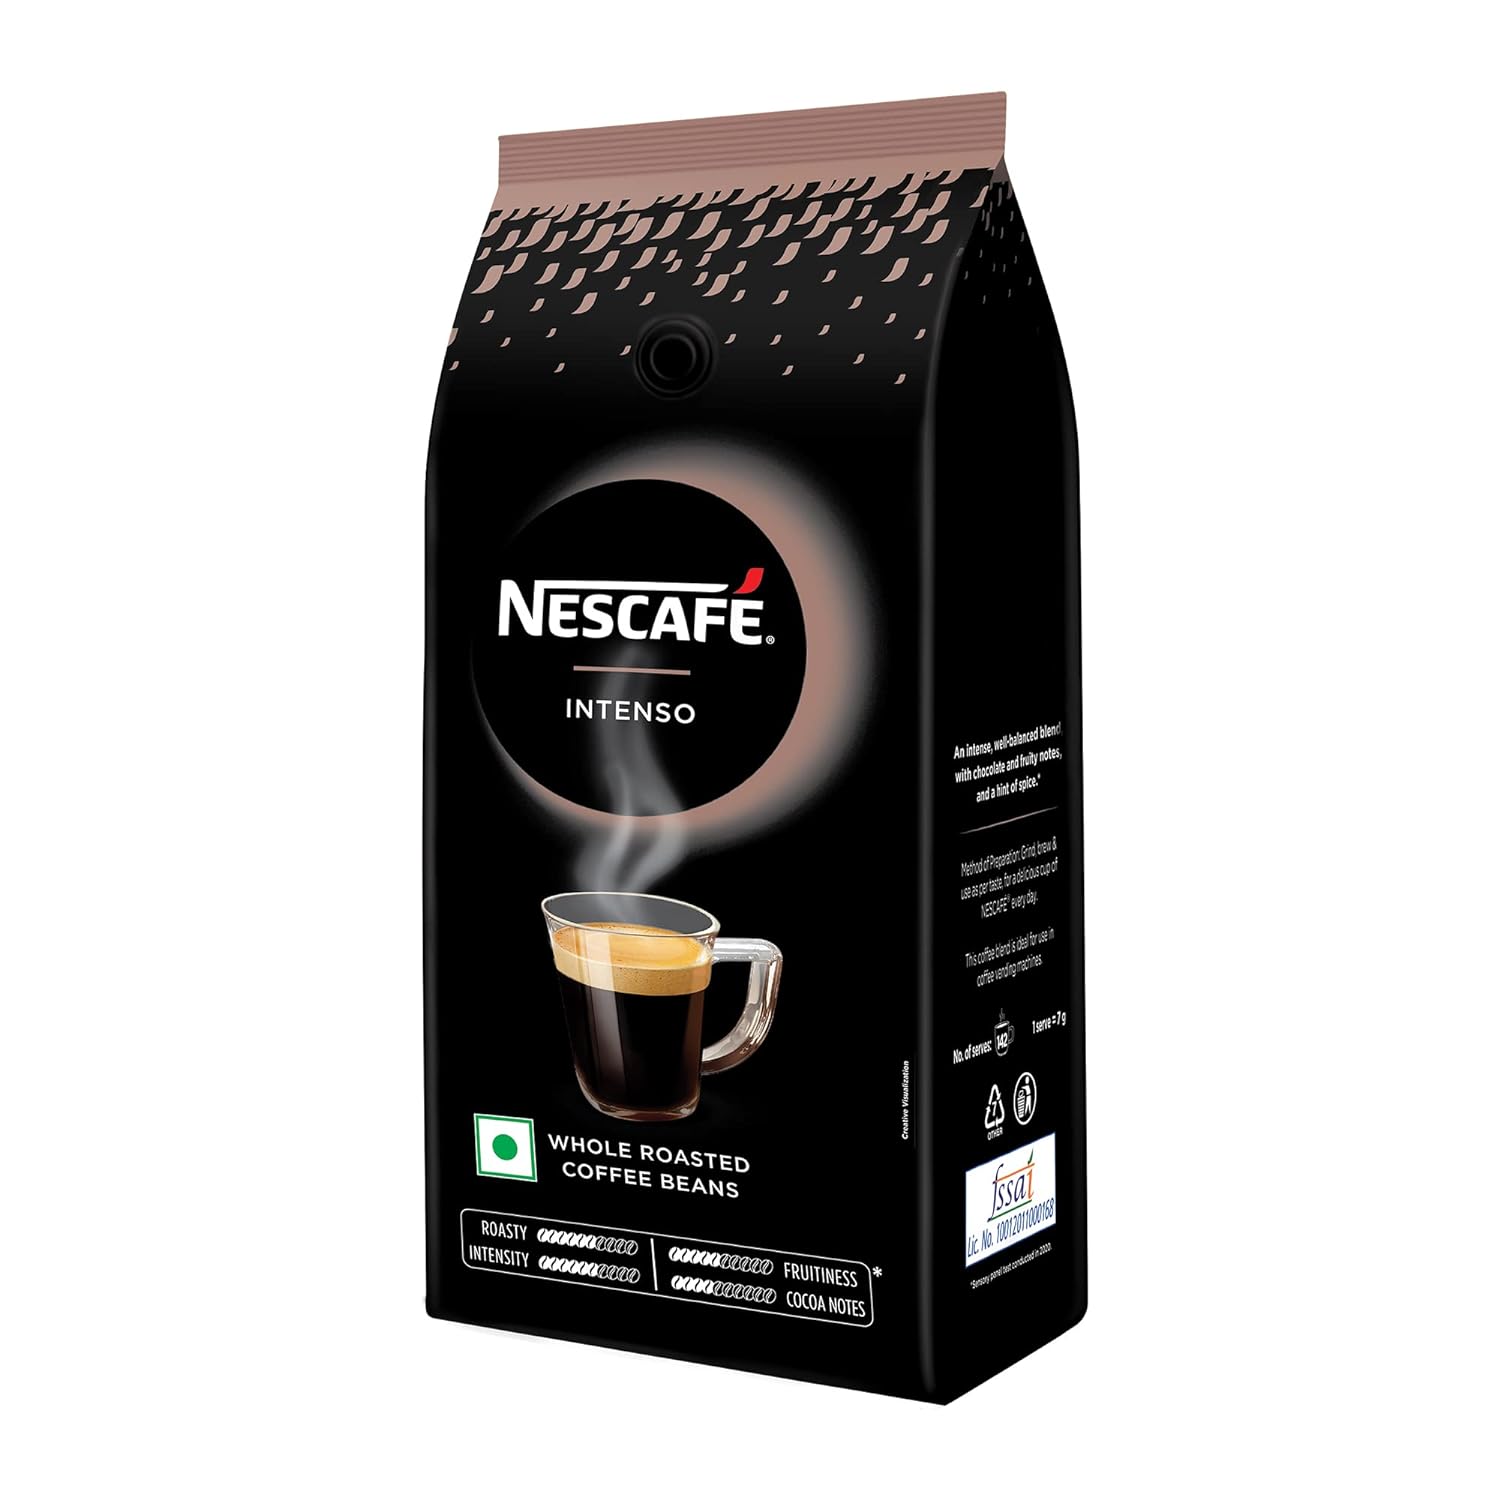 Nestle NESCAFÉ Intenso, 1Kg (Whole Roasted Coffee Beans)